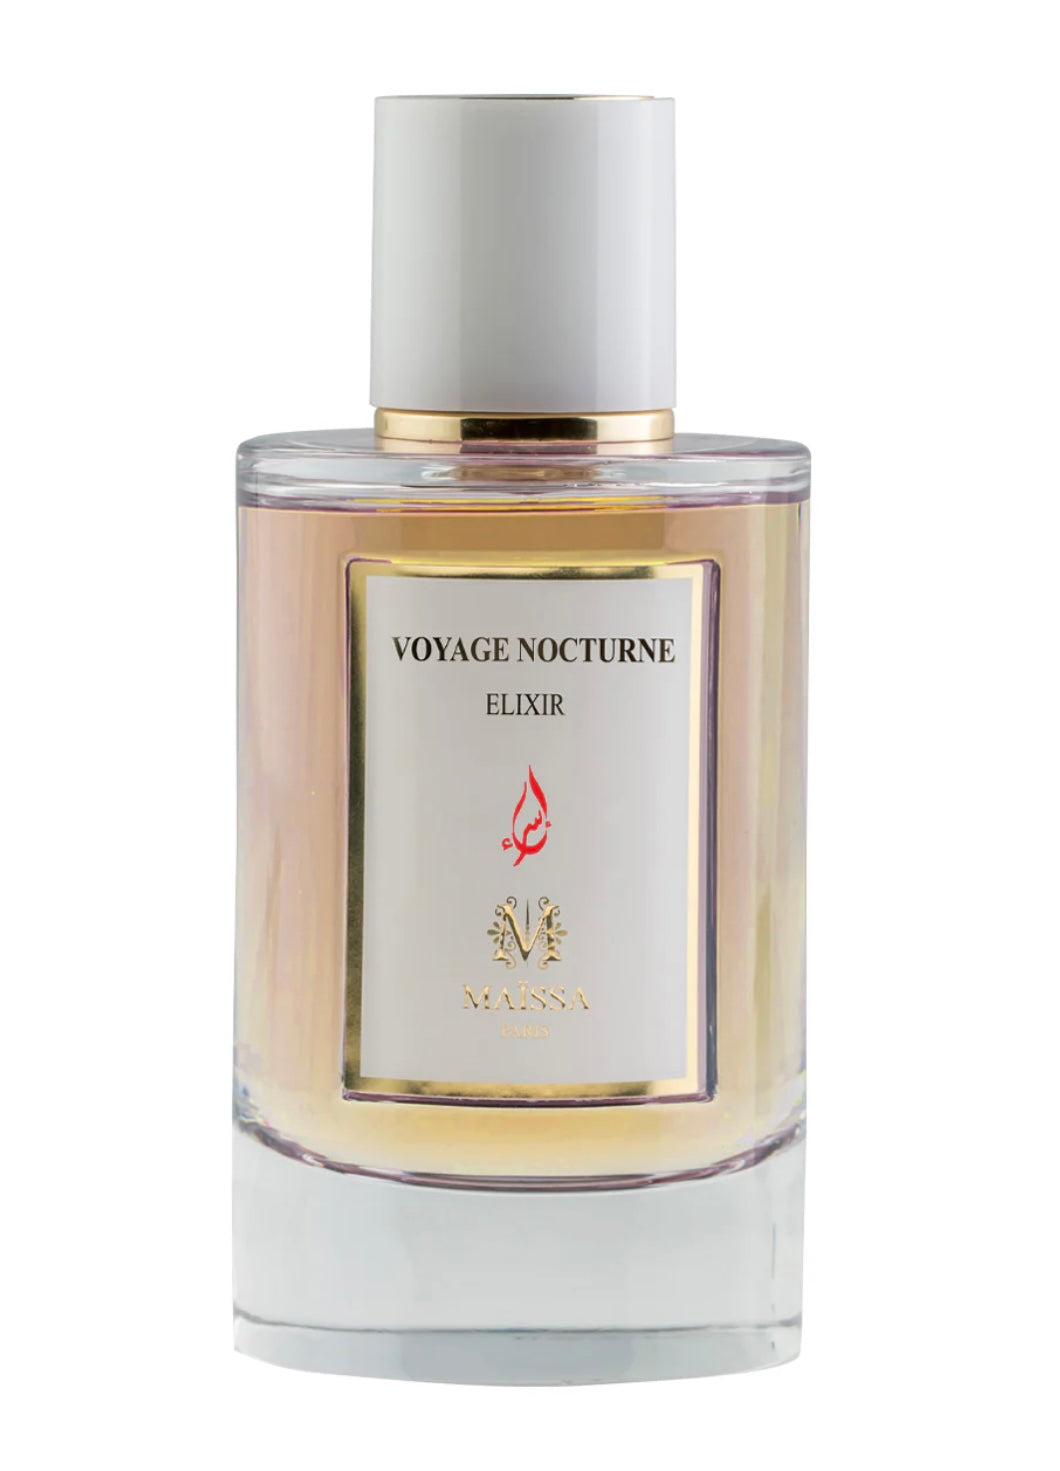 Maissa Paris Voyage Nocturne luxury fragrance